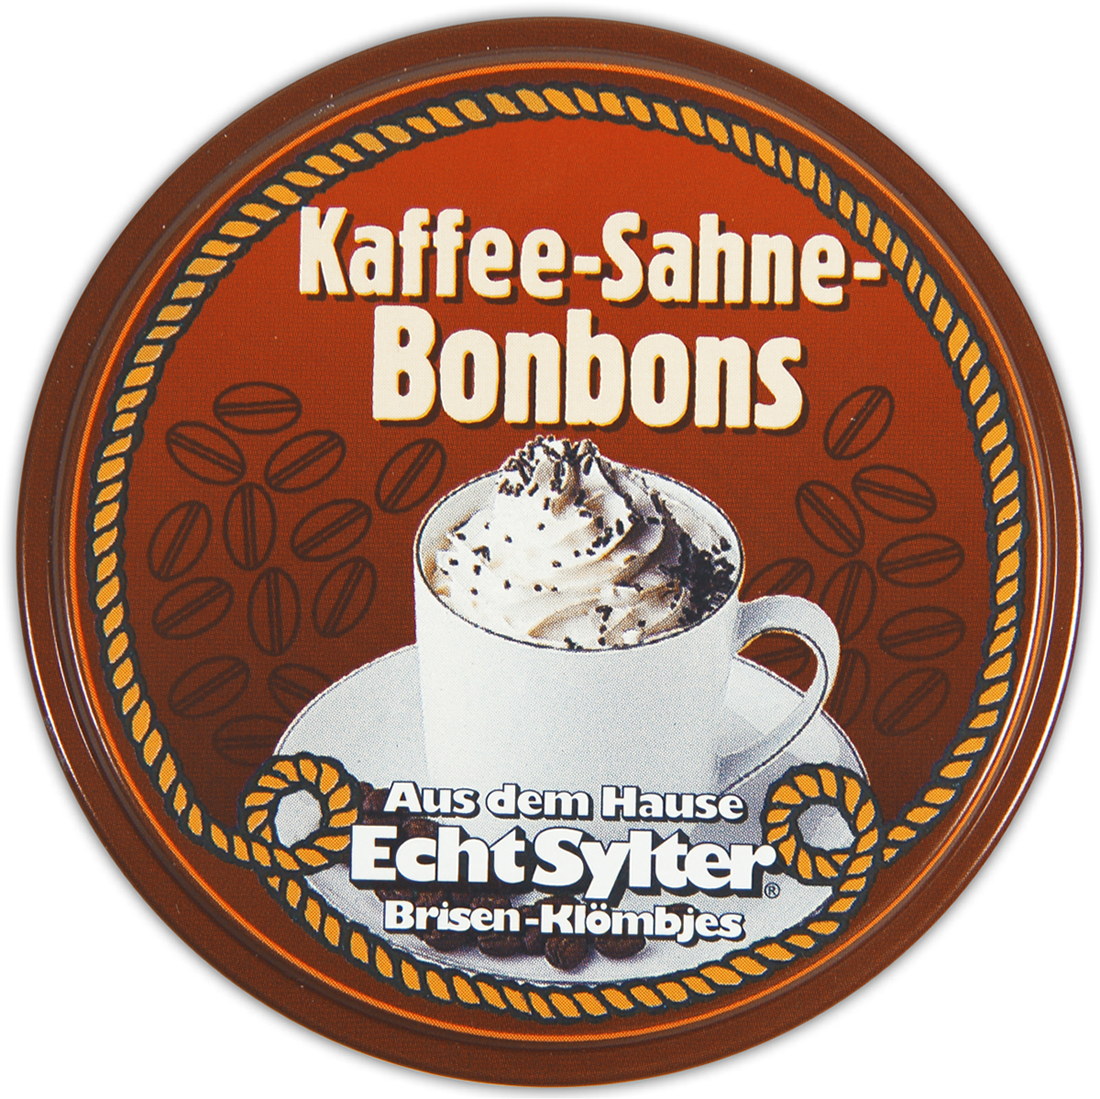 Echt Sylter Kaffee-Sahne-Bonbons | Online kaufen im World of Sweets Shop